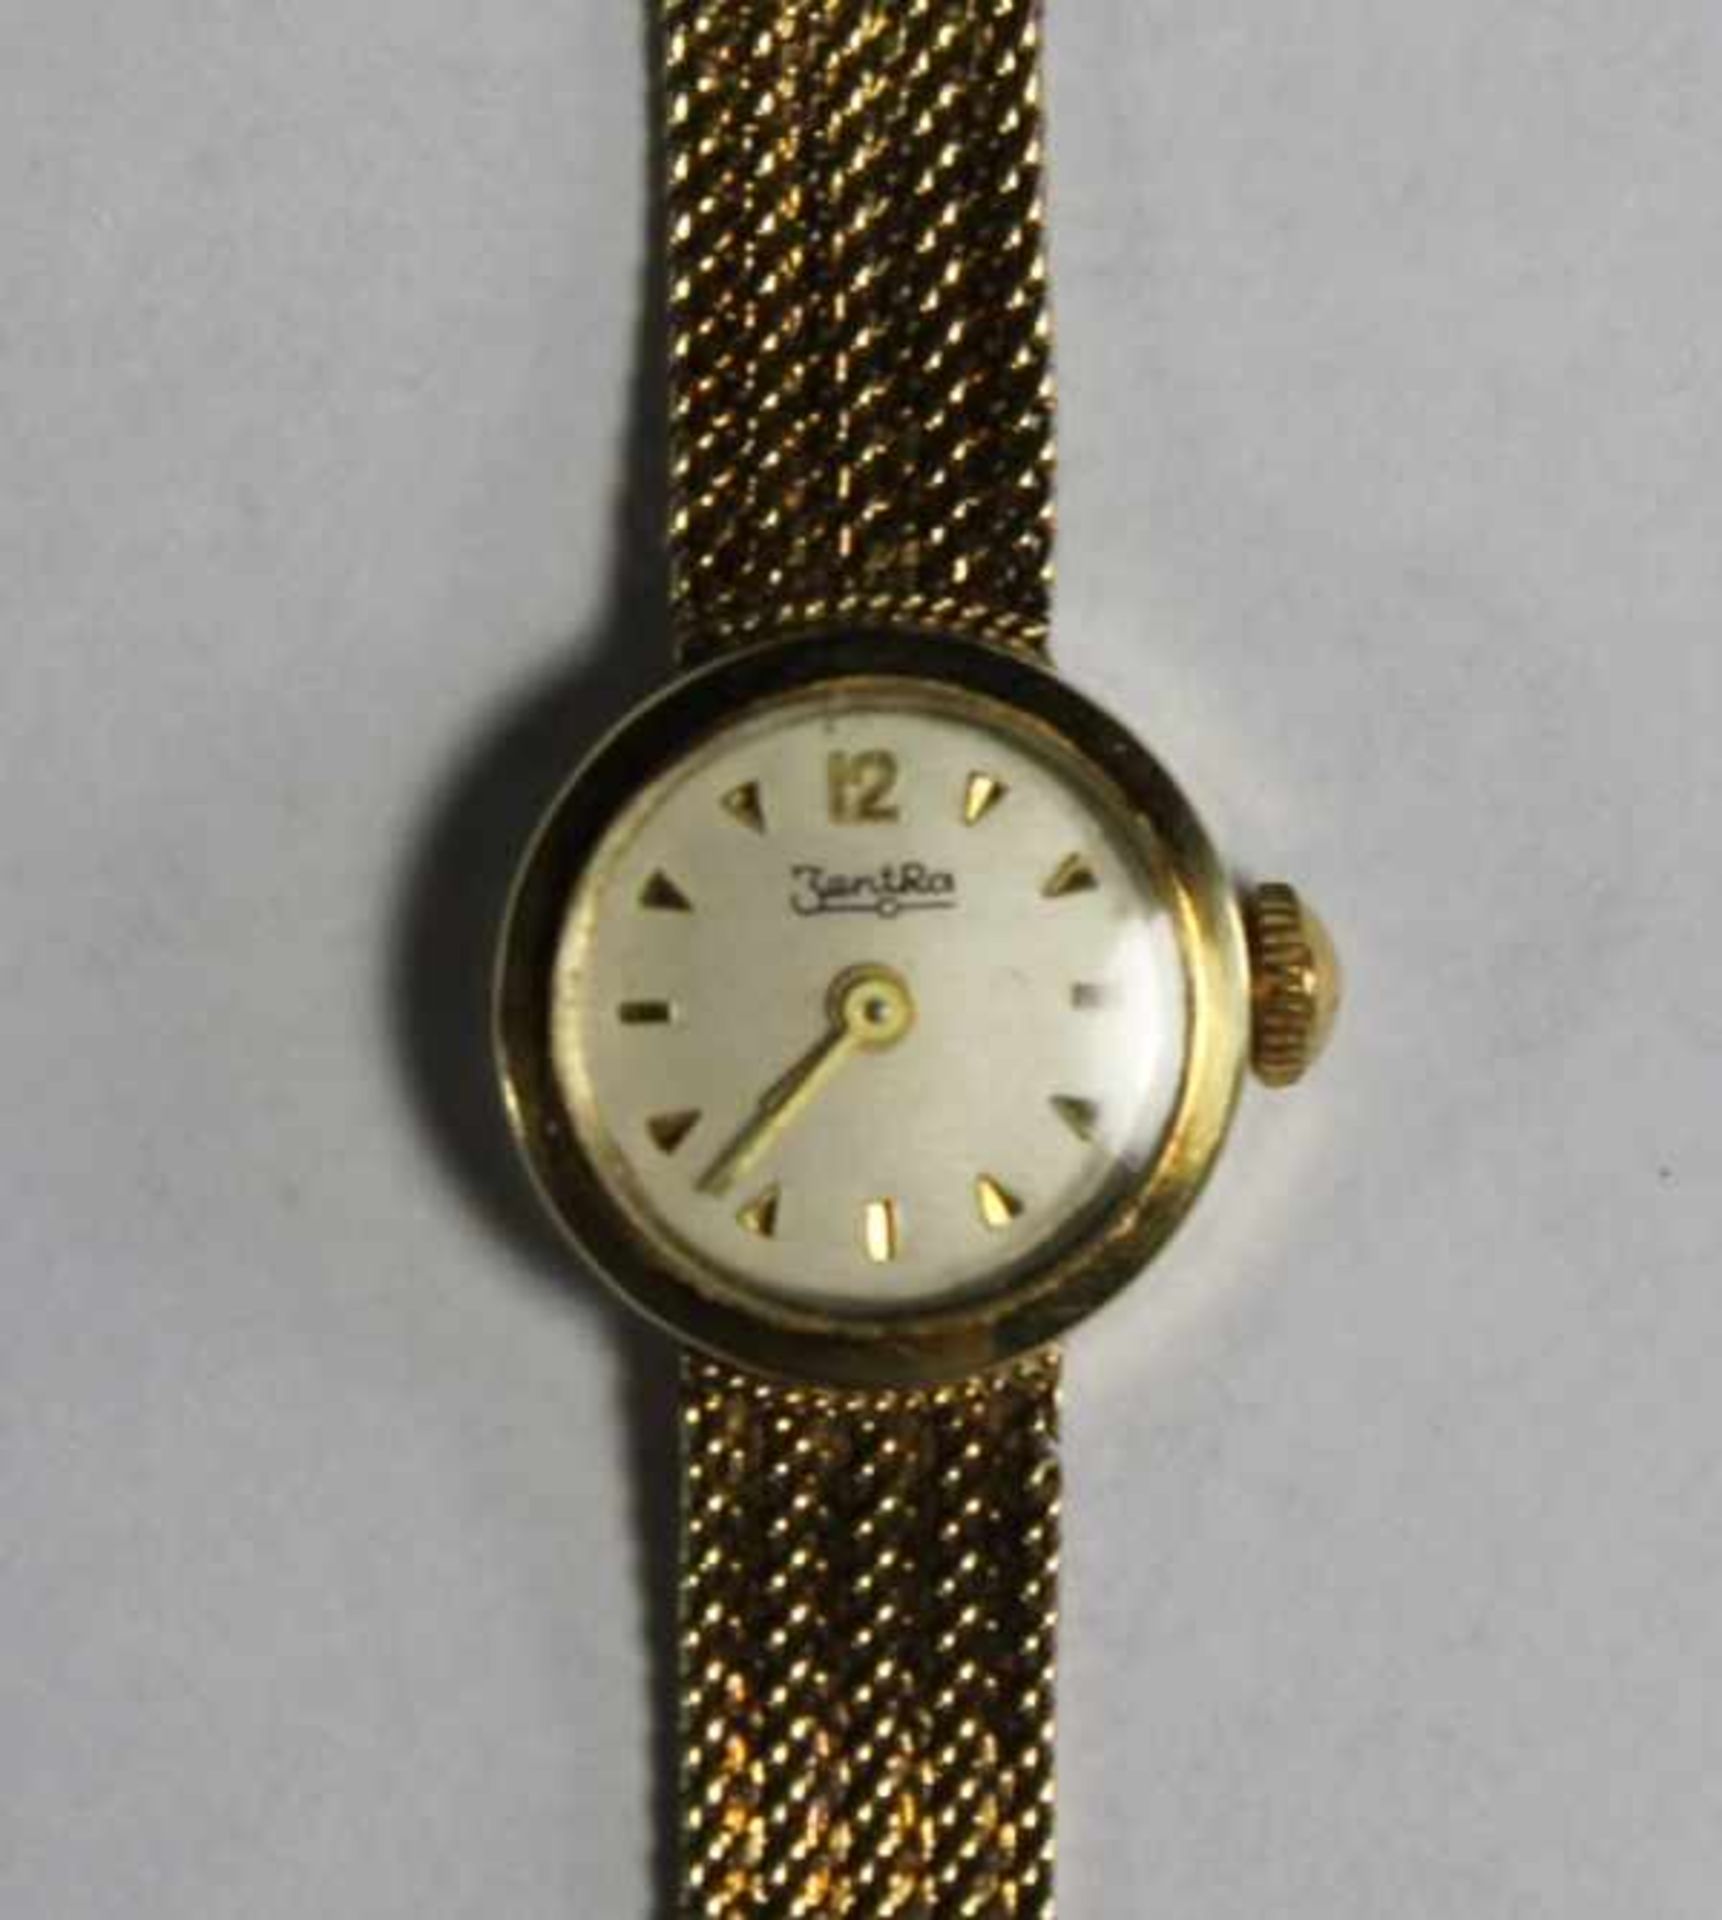 1 Damenarmbanduhr, Lünette und Armband 14kt.Gg (585/000) "ZentRa", L ca. 17cm, Funktion nicht